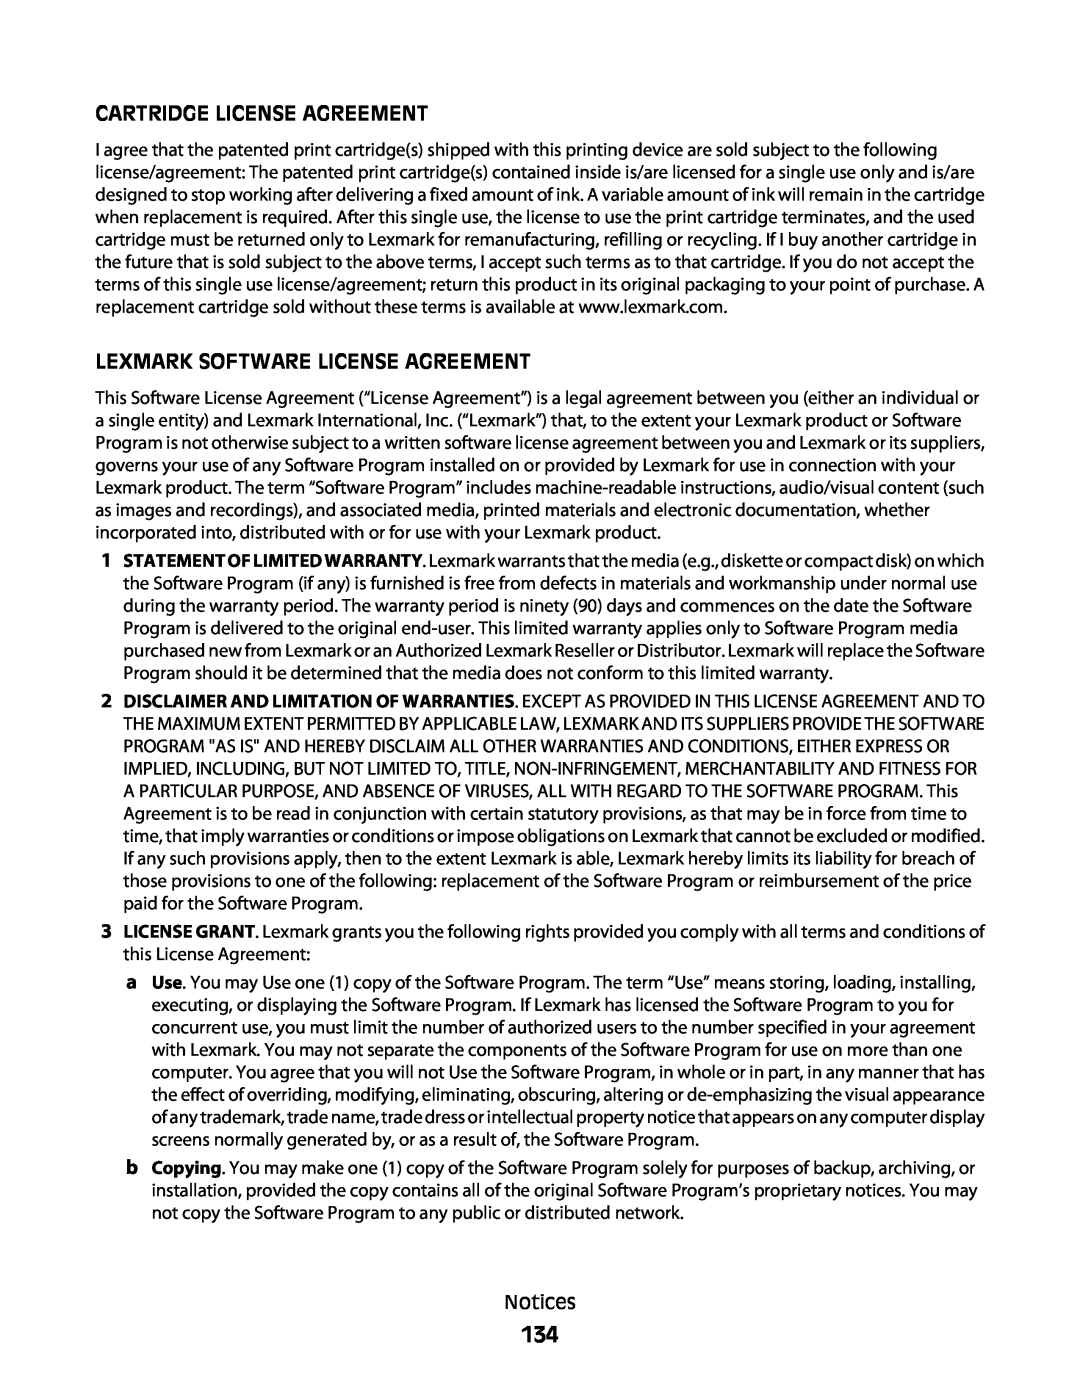 Lexmark 4600, 3600 manual Cartridge License Agreement, Lexmark Software License Agreement 